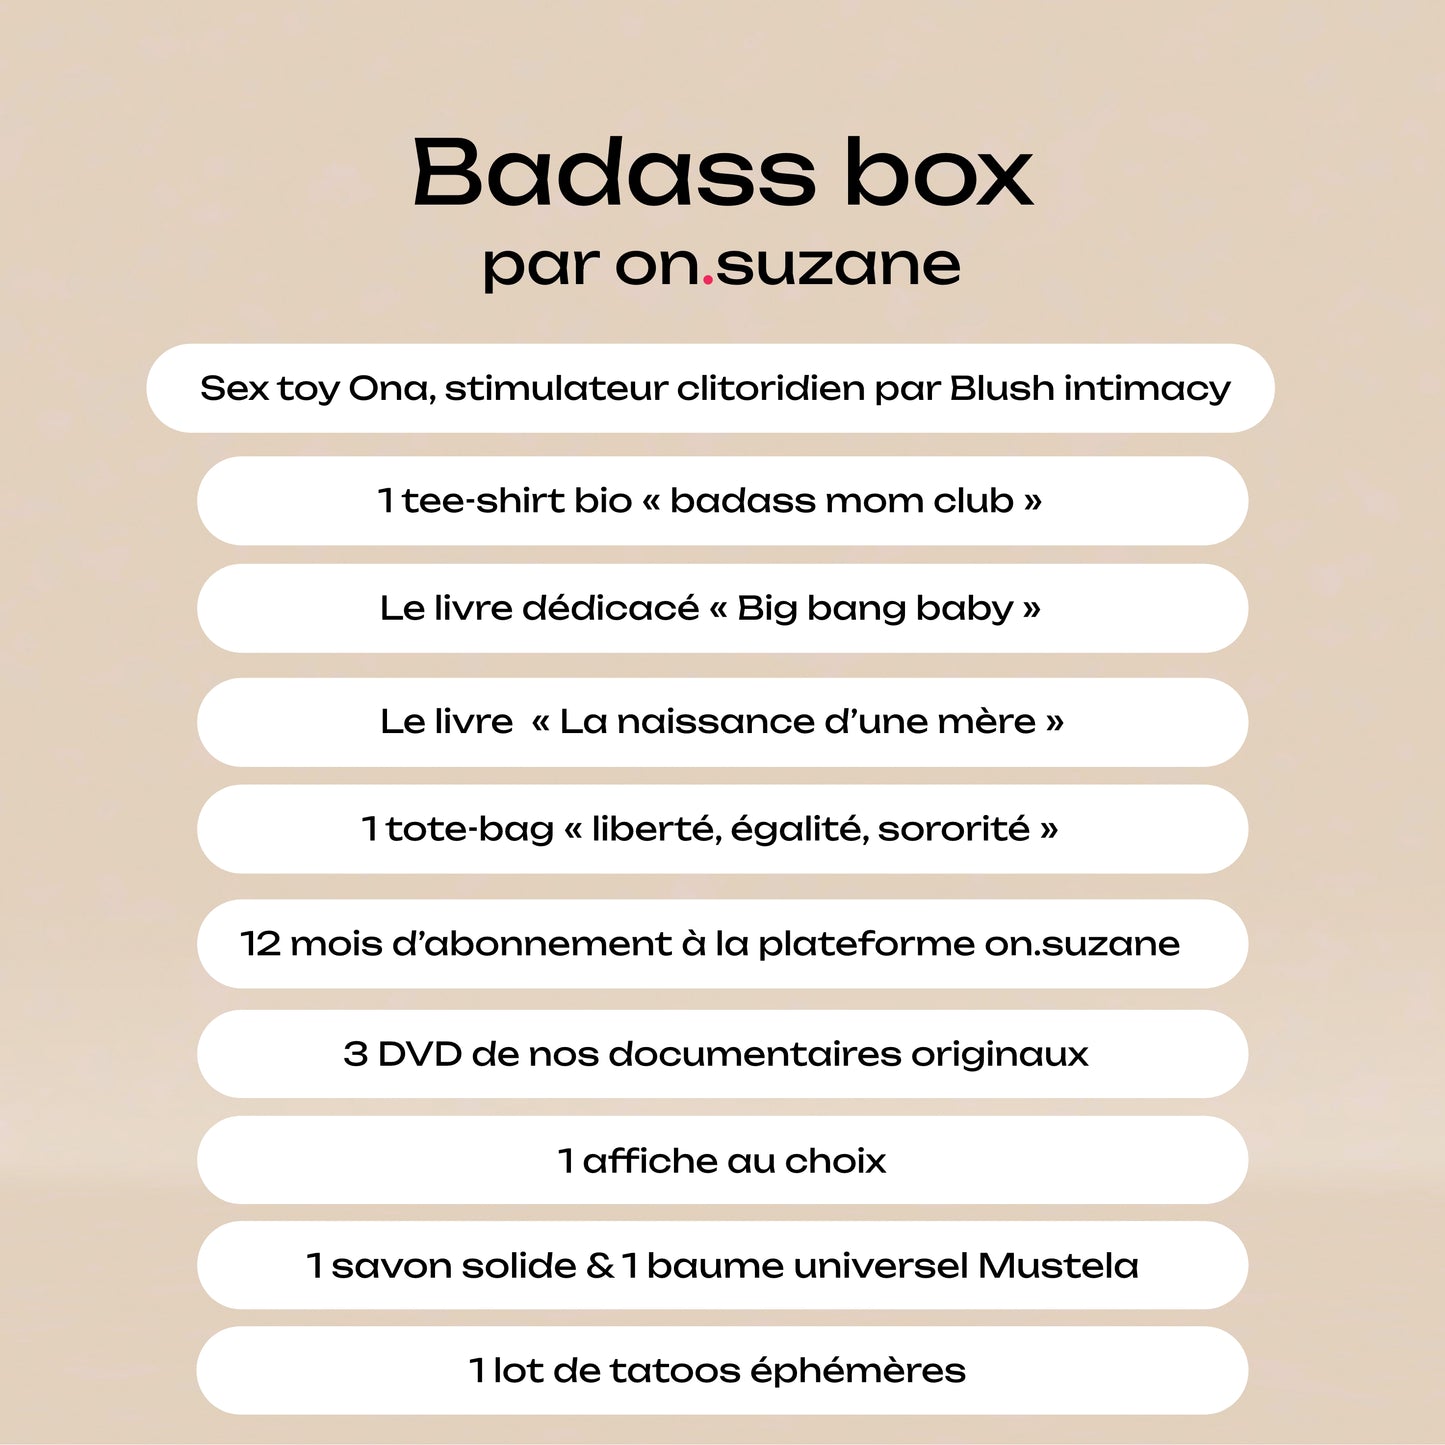 Badass box - la collab